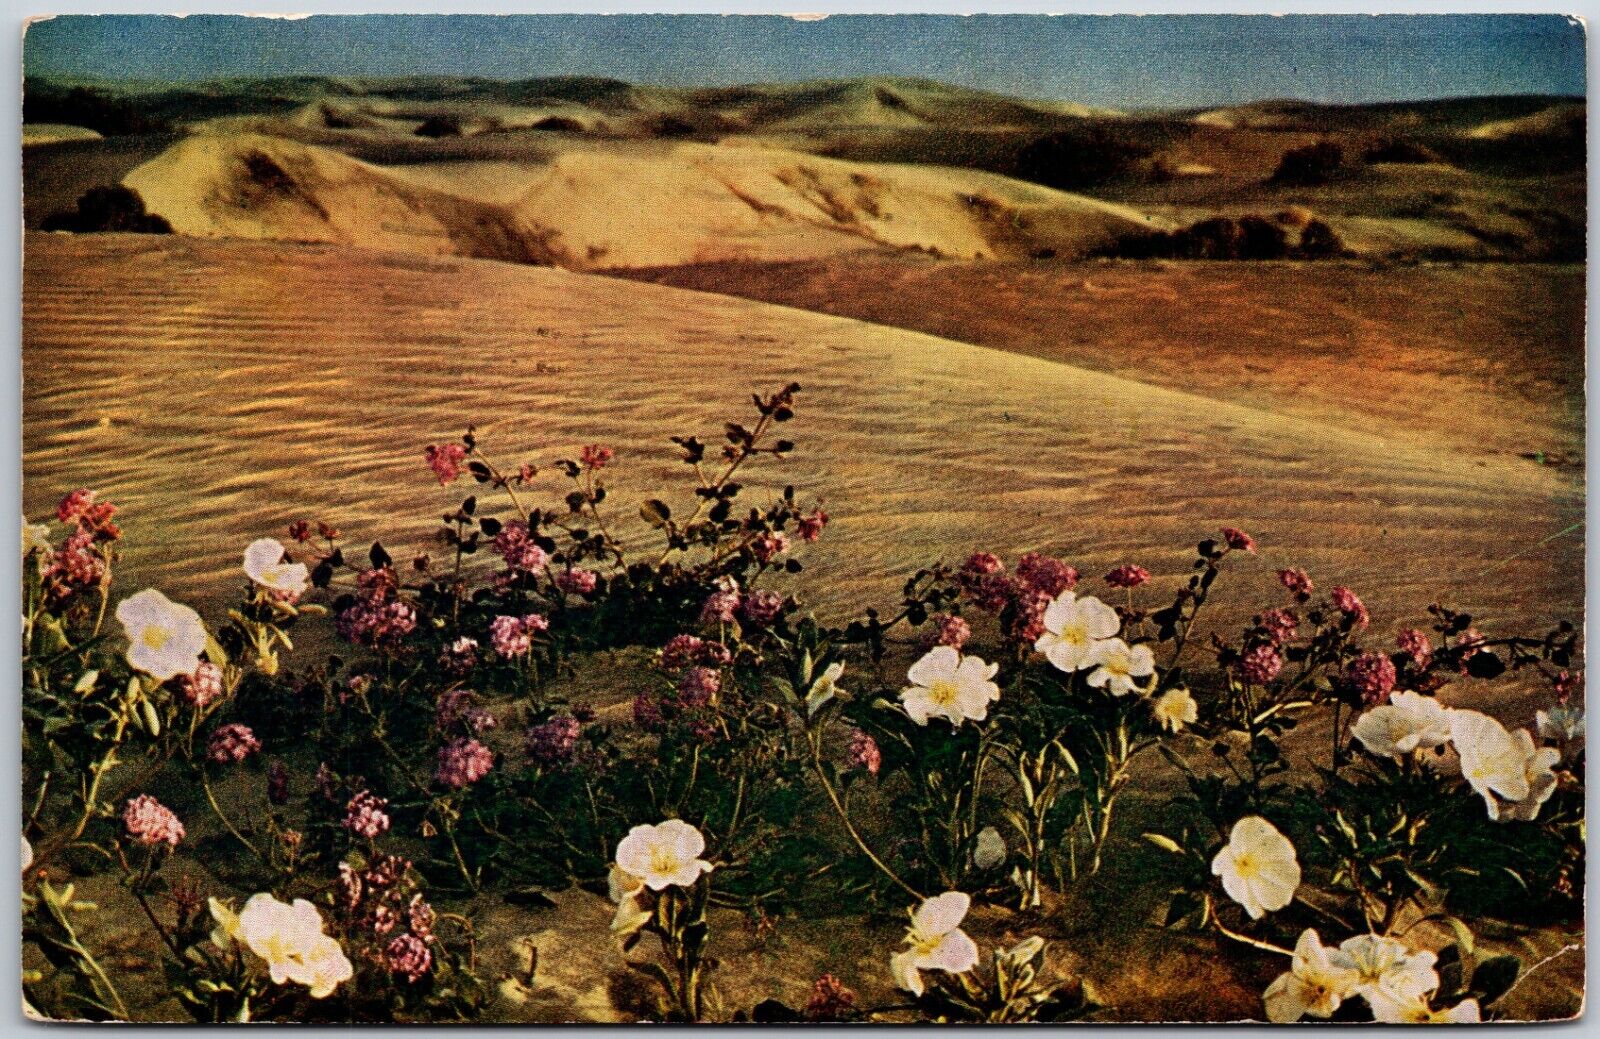 Verbenas in the Sand Dunes, Southern California Desert - Postcard